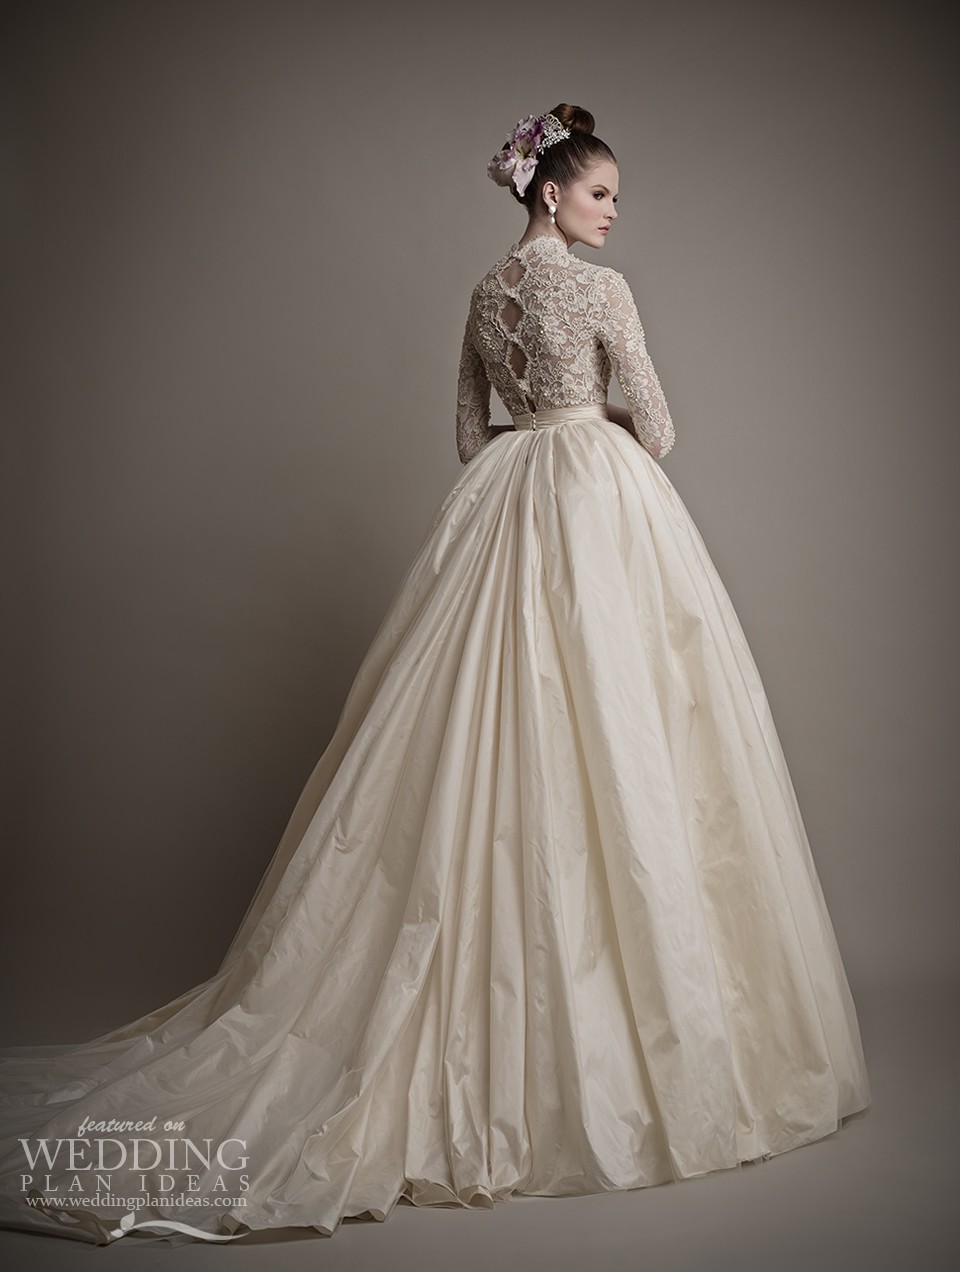 Charlotte Lace Wedding Dress by Ersa Atelier Back View